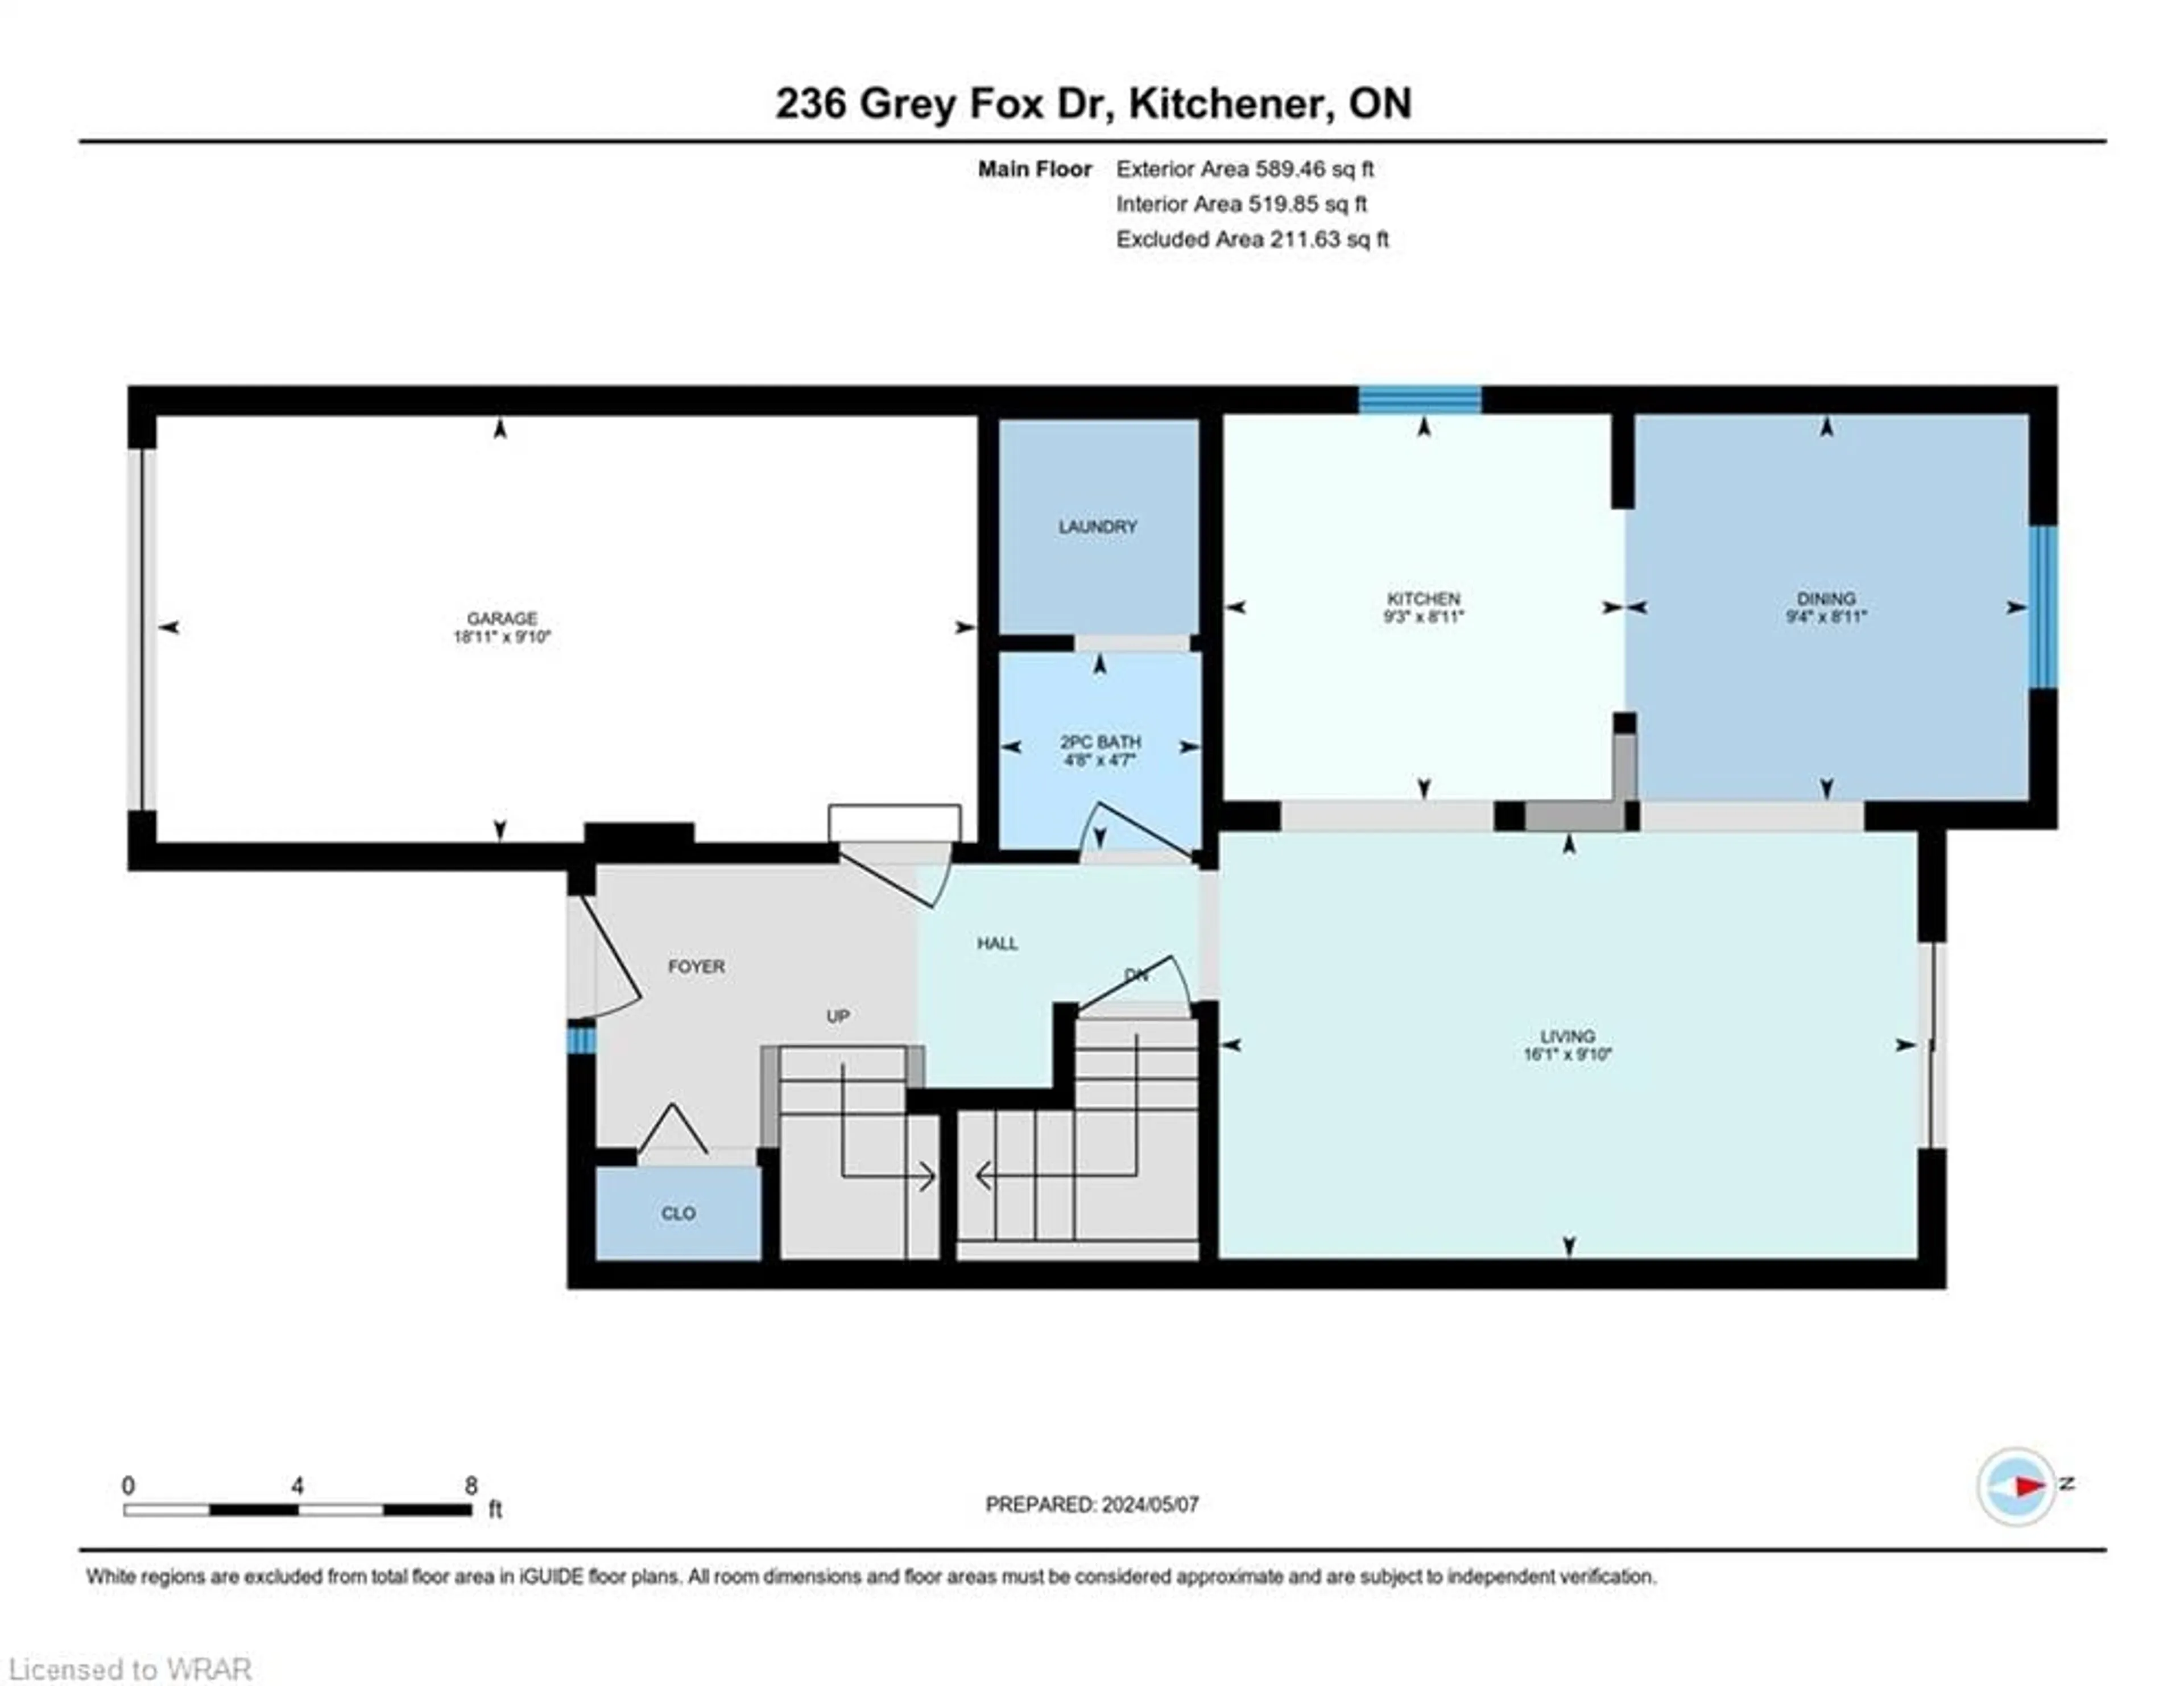 Floor plan for 236 Grey Fox Dr, Kitchener Ontario N2E 3N4